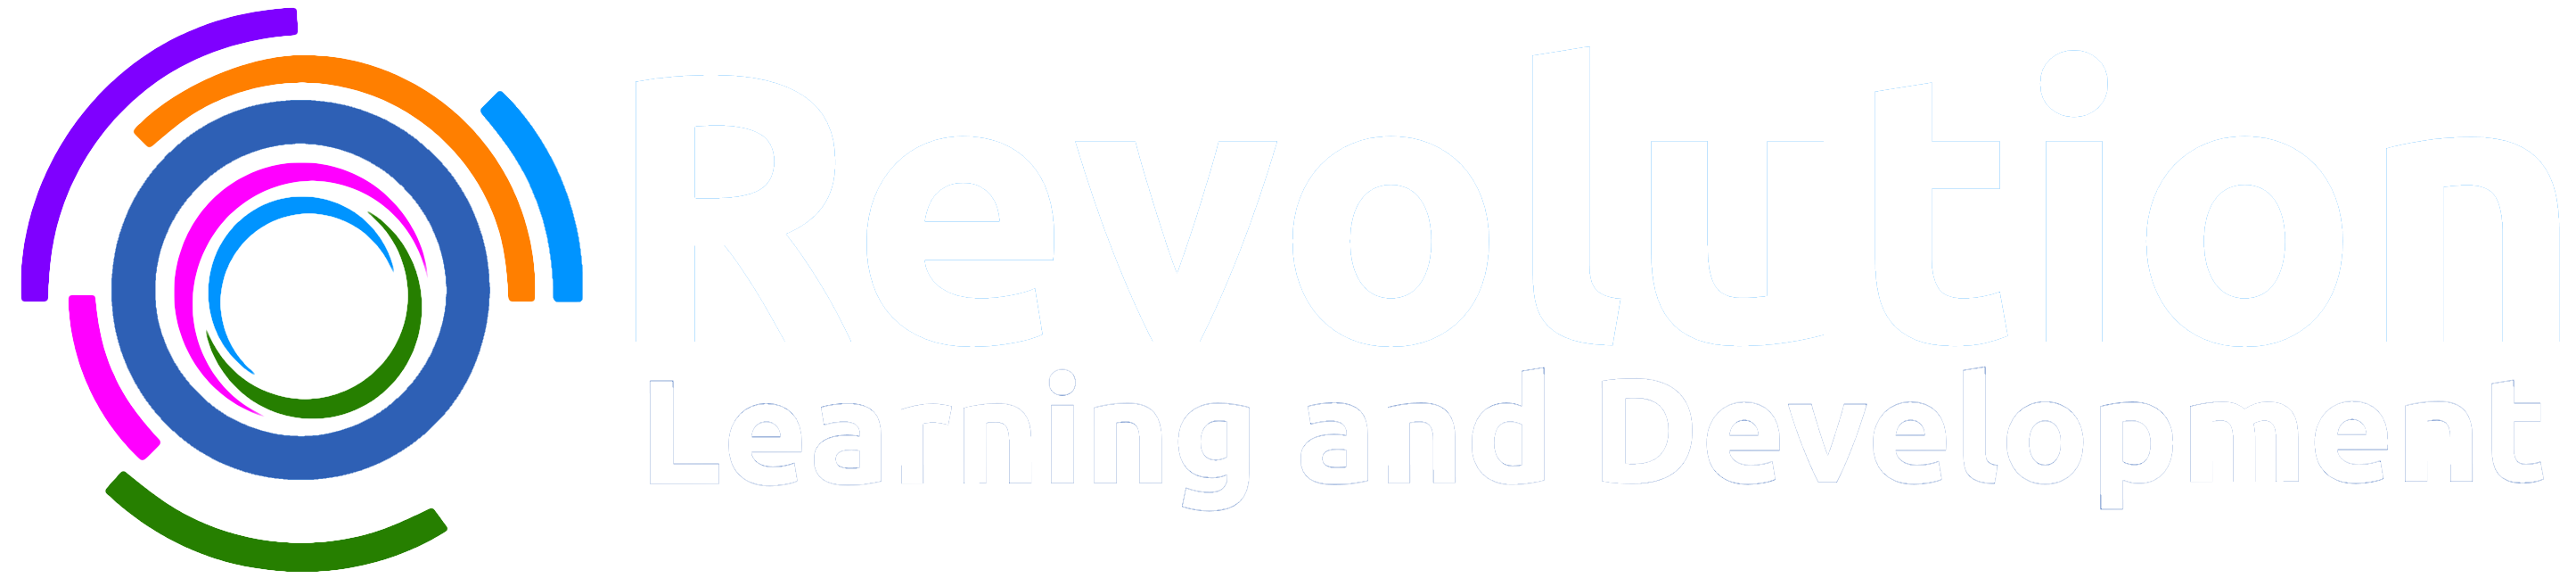 Revolution Learning and Development – France